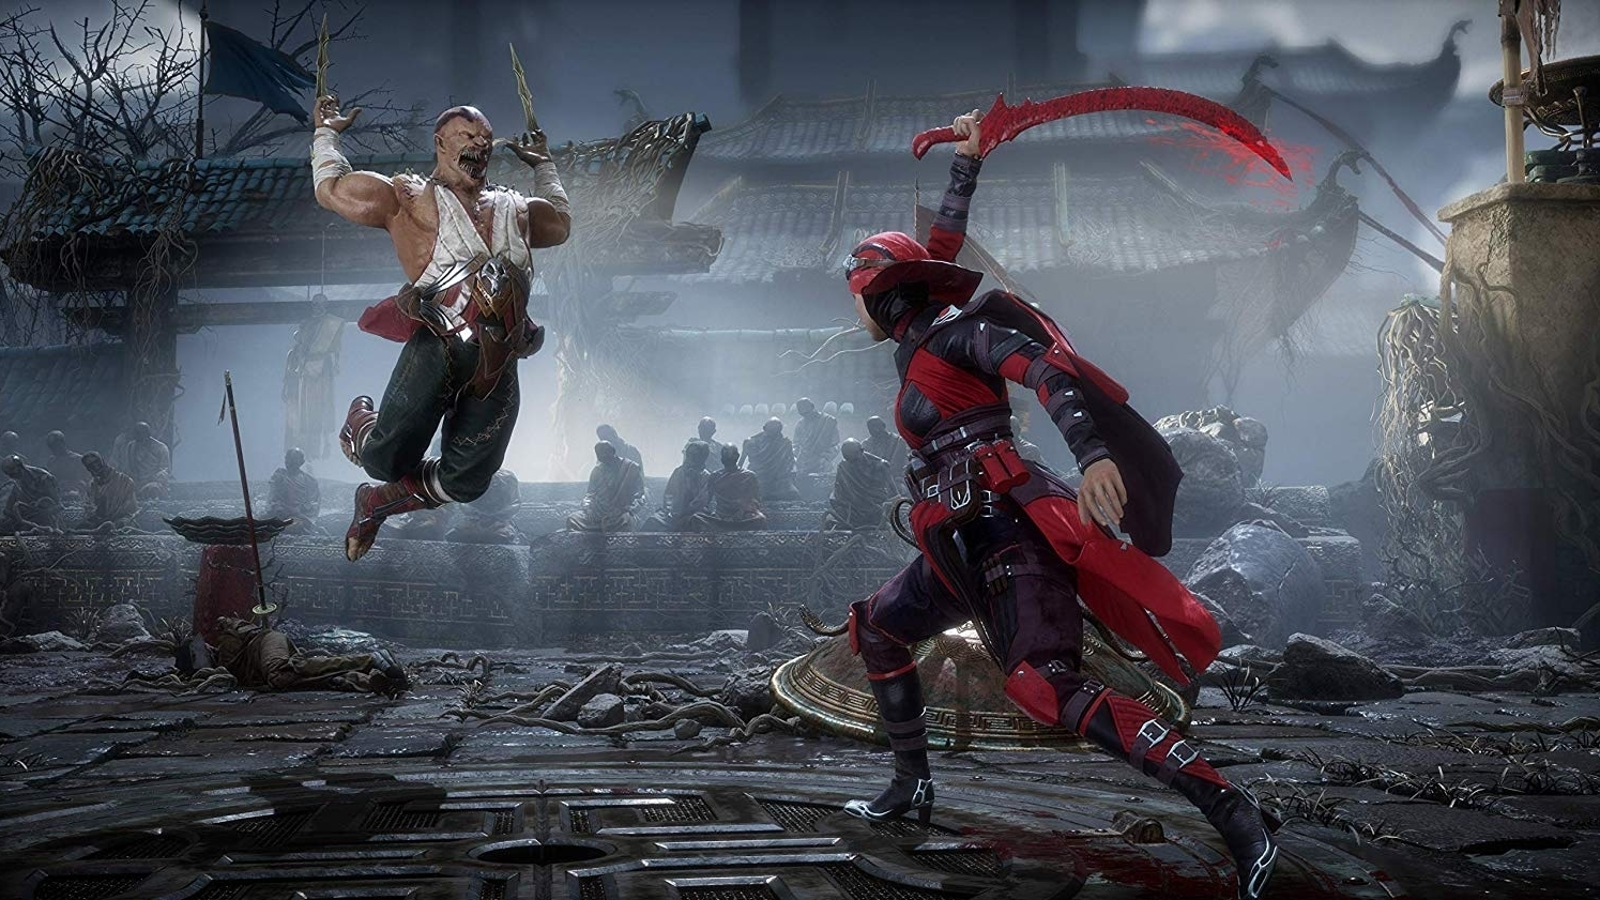 Is Mortal Kombat 11 Cross-Platform? Answered